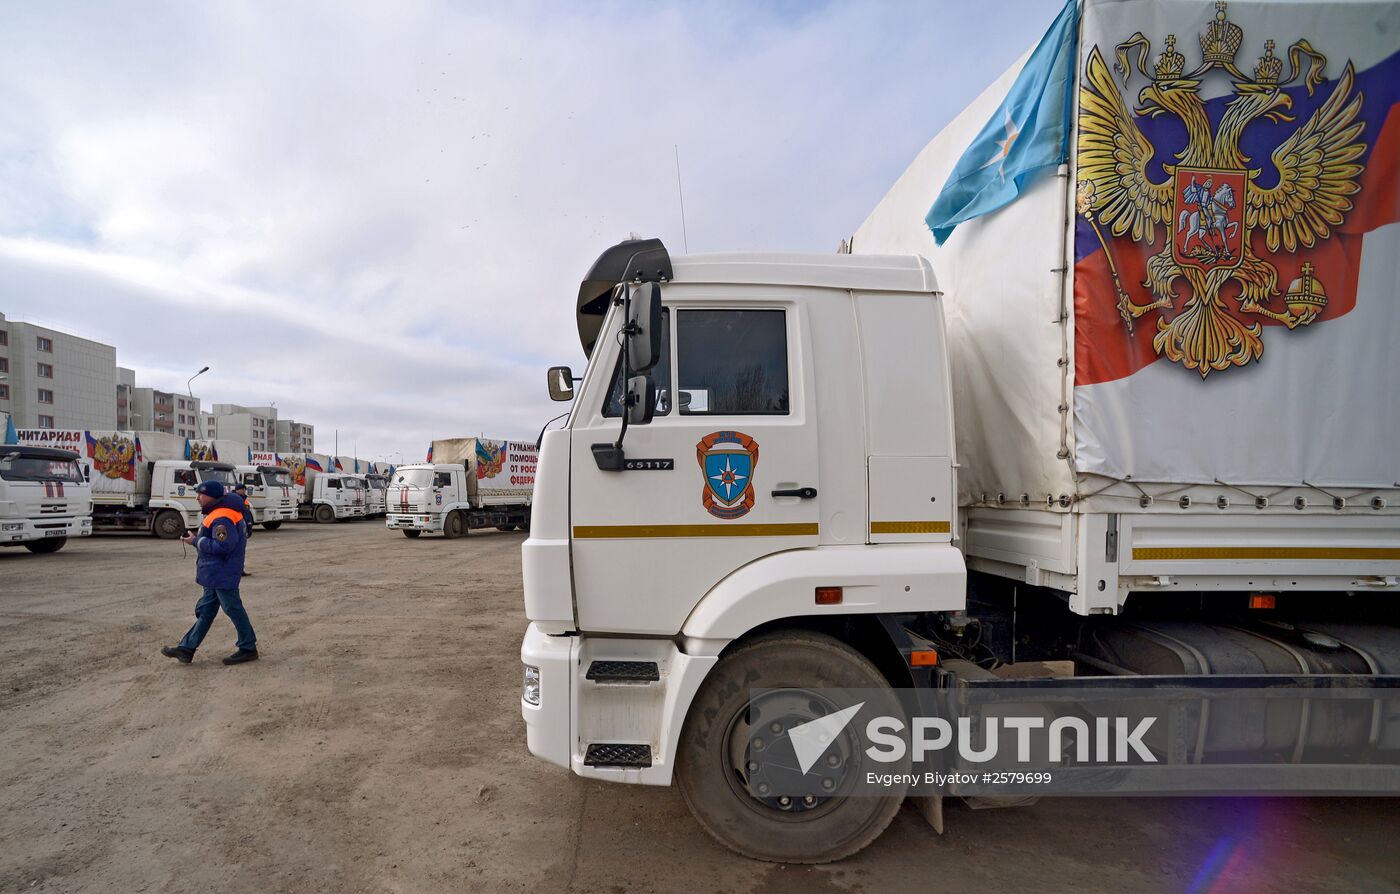 16th humanitarian convoy for South-Eastern Ukrainians, formed in Rostov Region